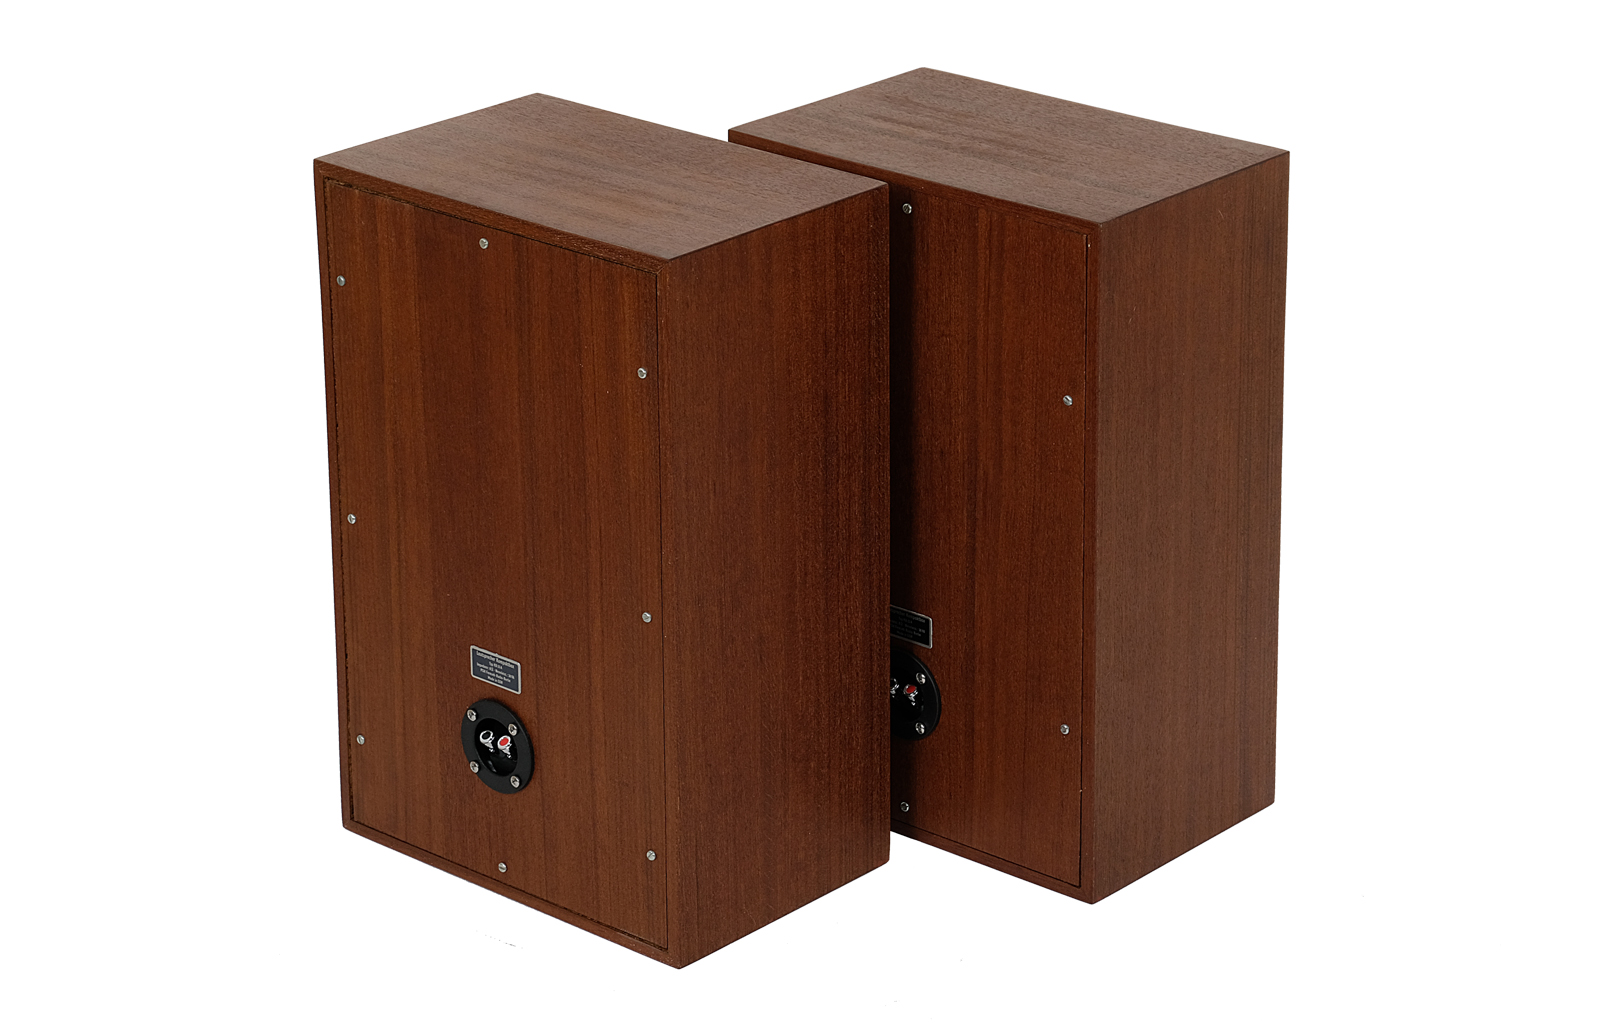 PGH Kompaktbox KB35A speakers